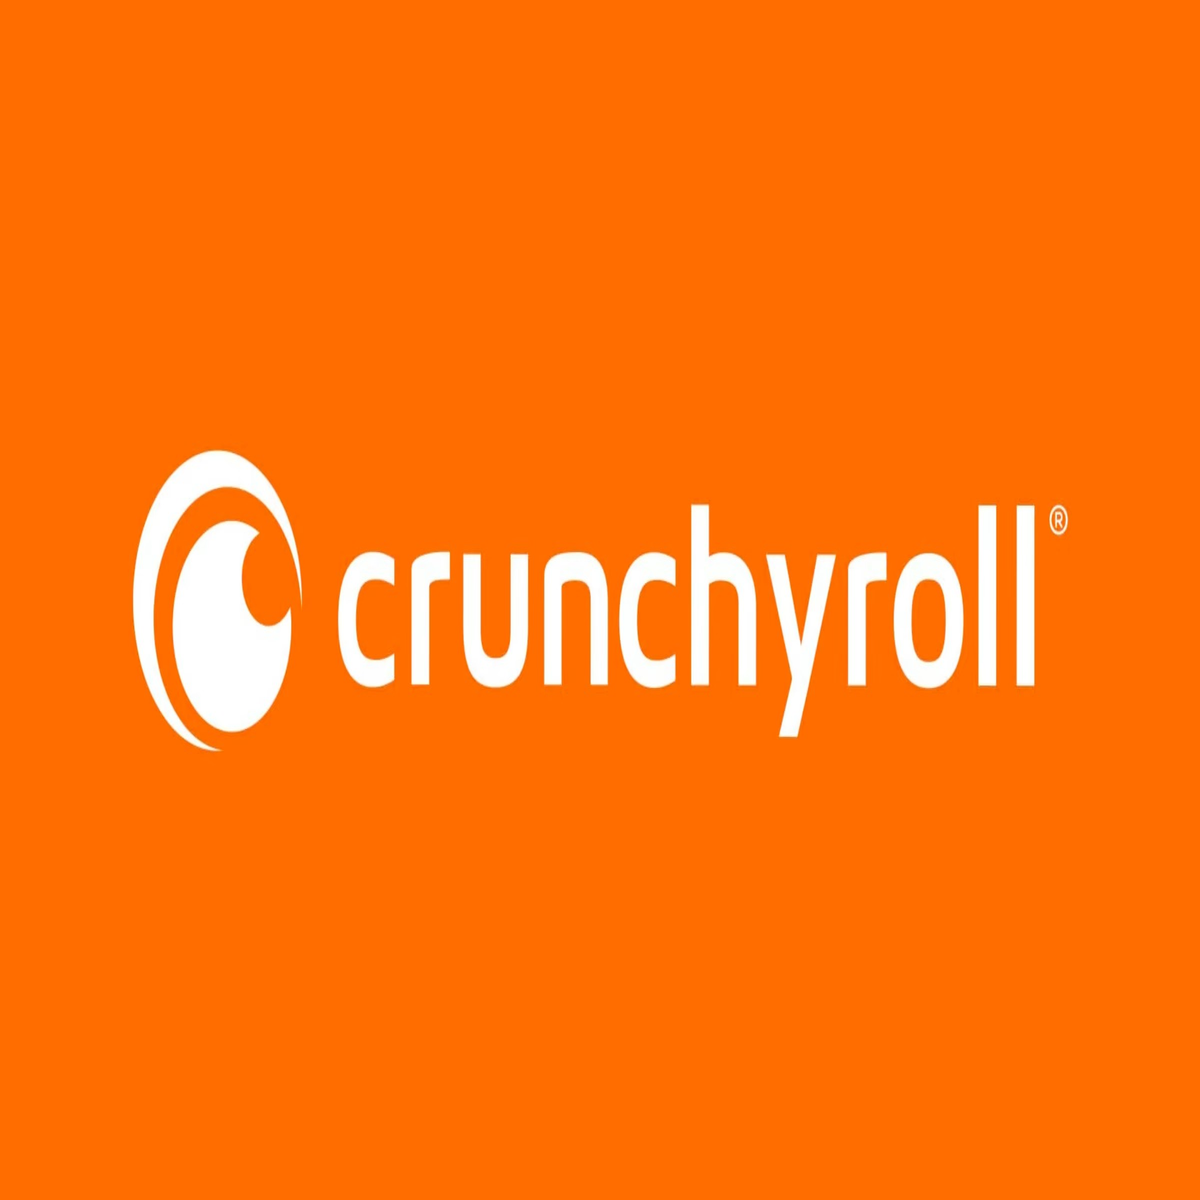 INTERNATIONAL] Crunchyroll Introduces New Membership Tiers, Offers